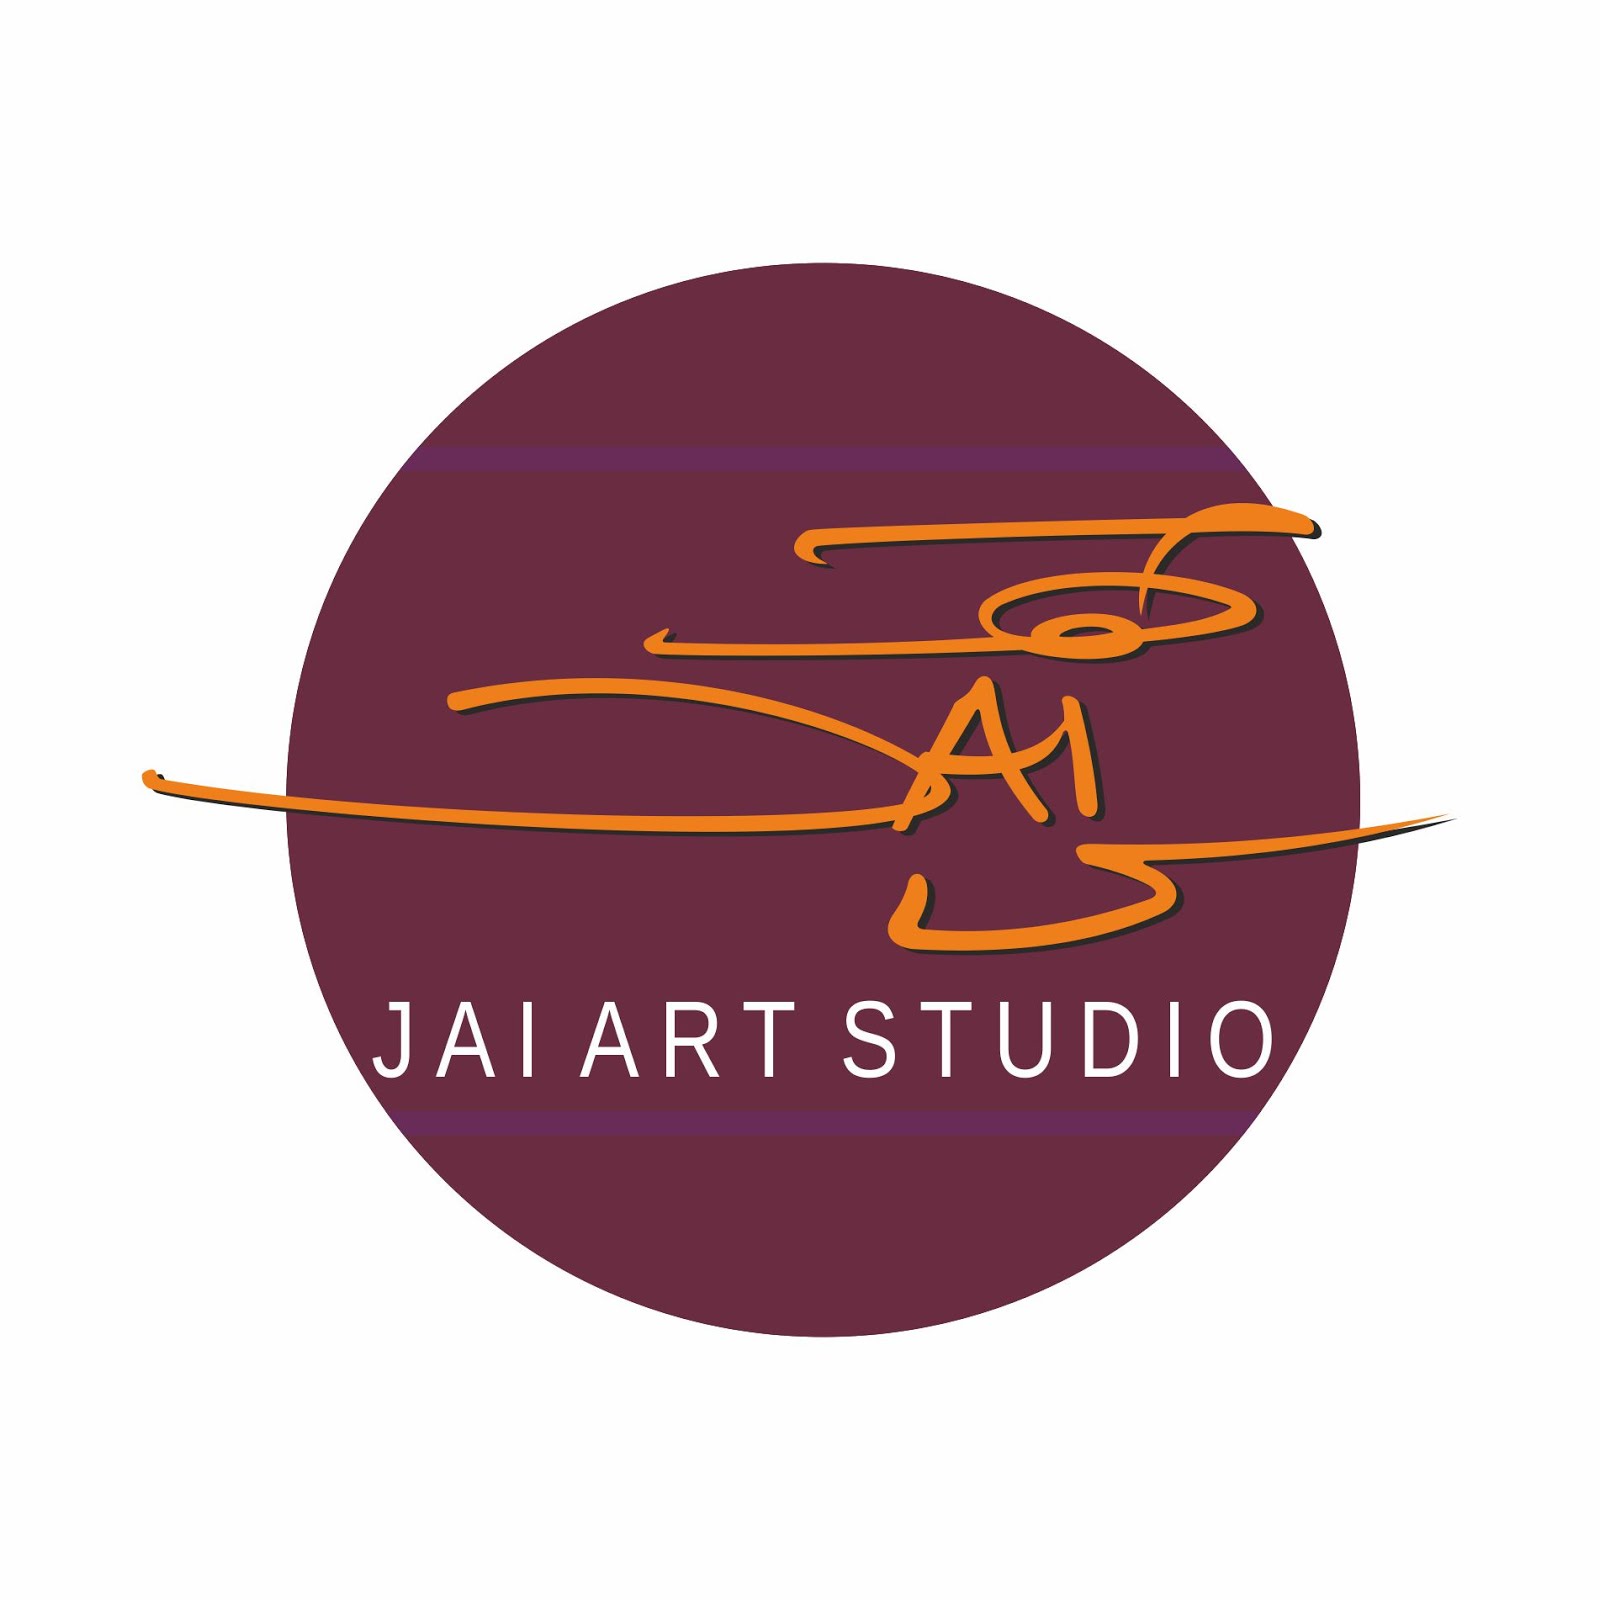 JAI ART STUDIO